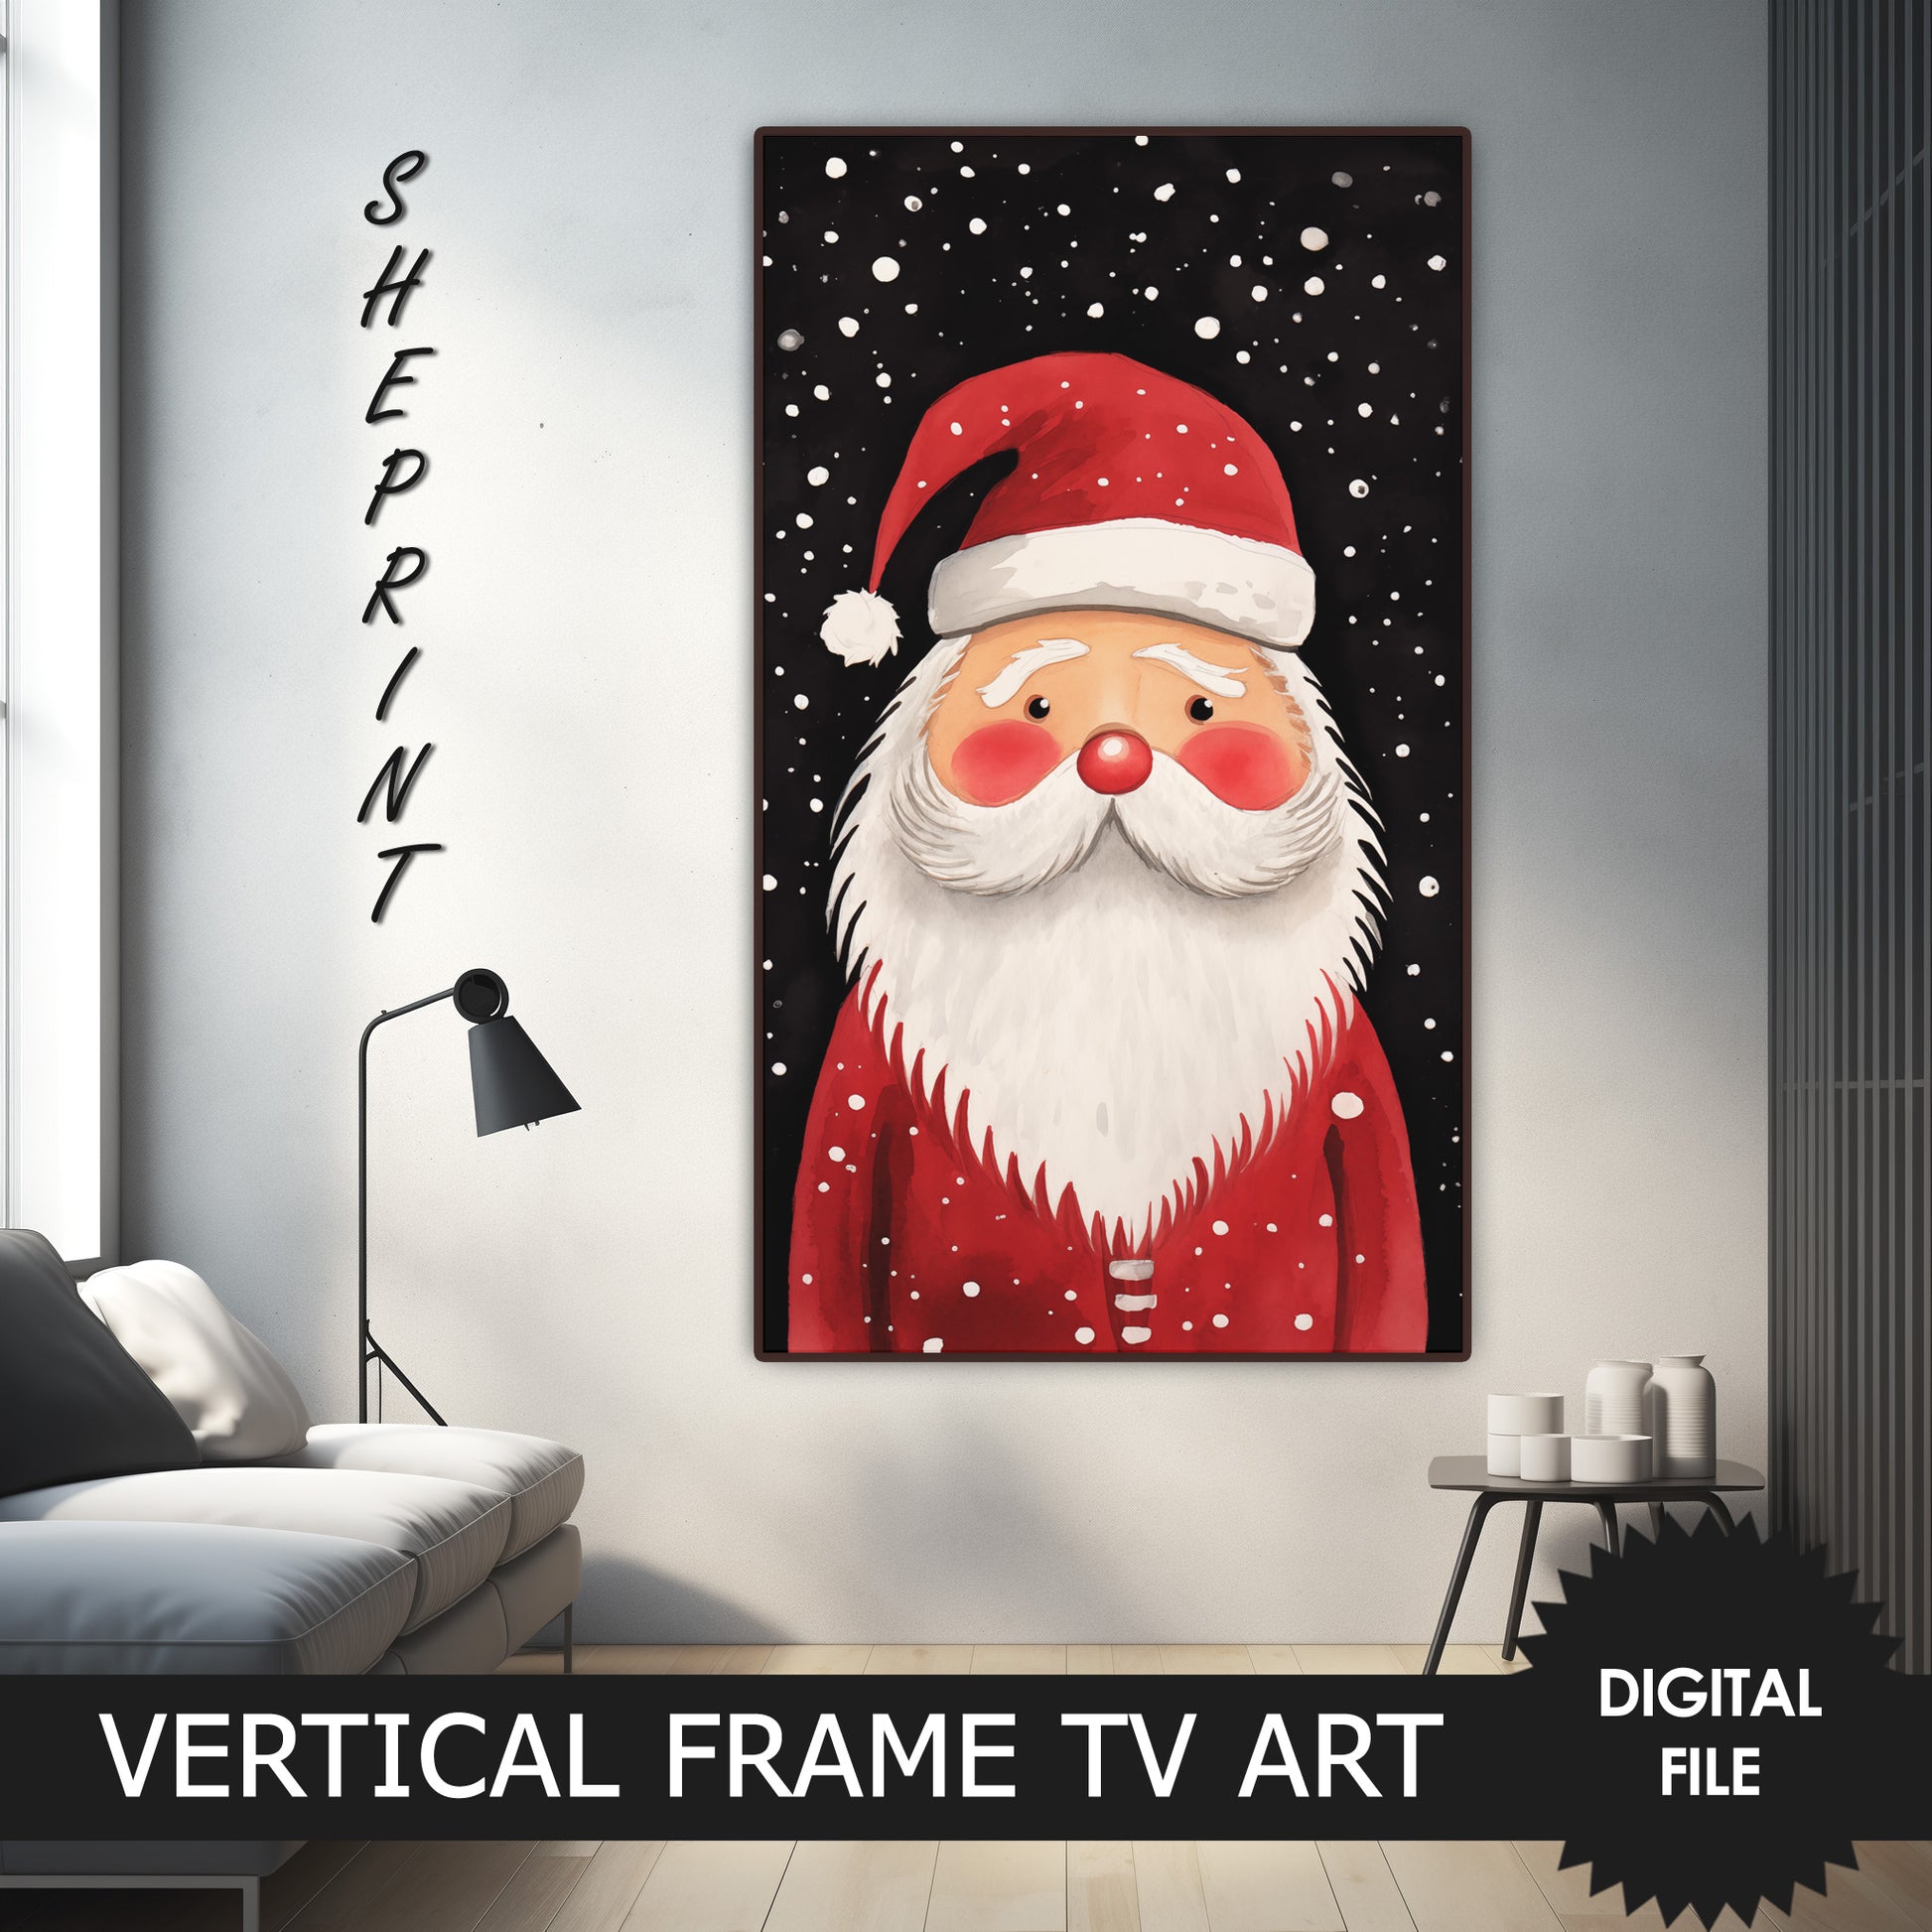 Vertical & Horizontal Frame TV Art For Kids, Christmas Santa preview on Samsung Frame TV when mounted vertically